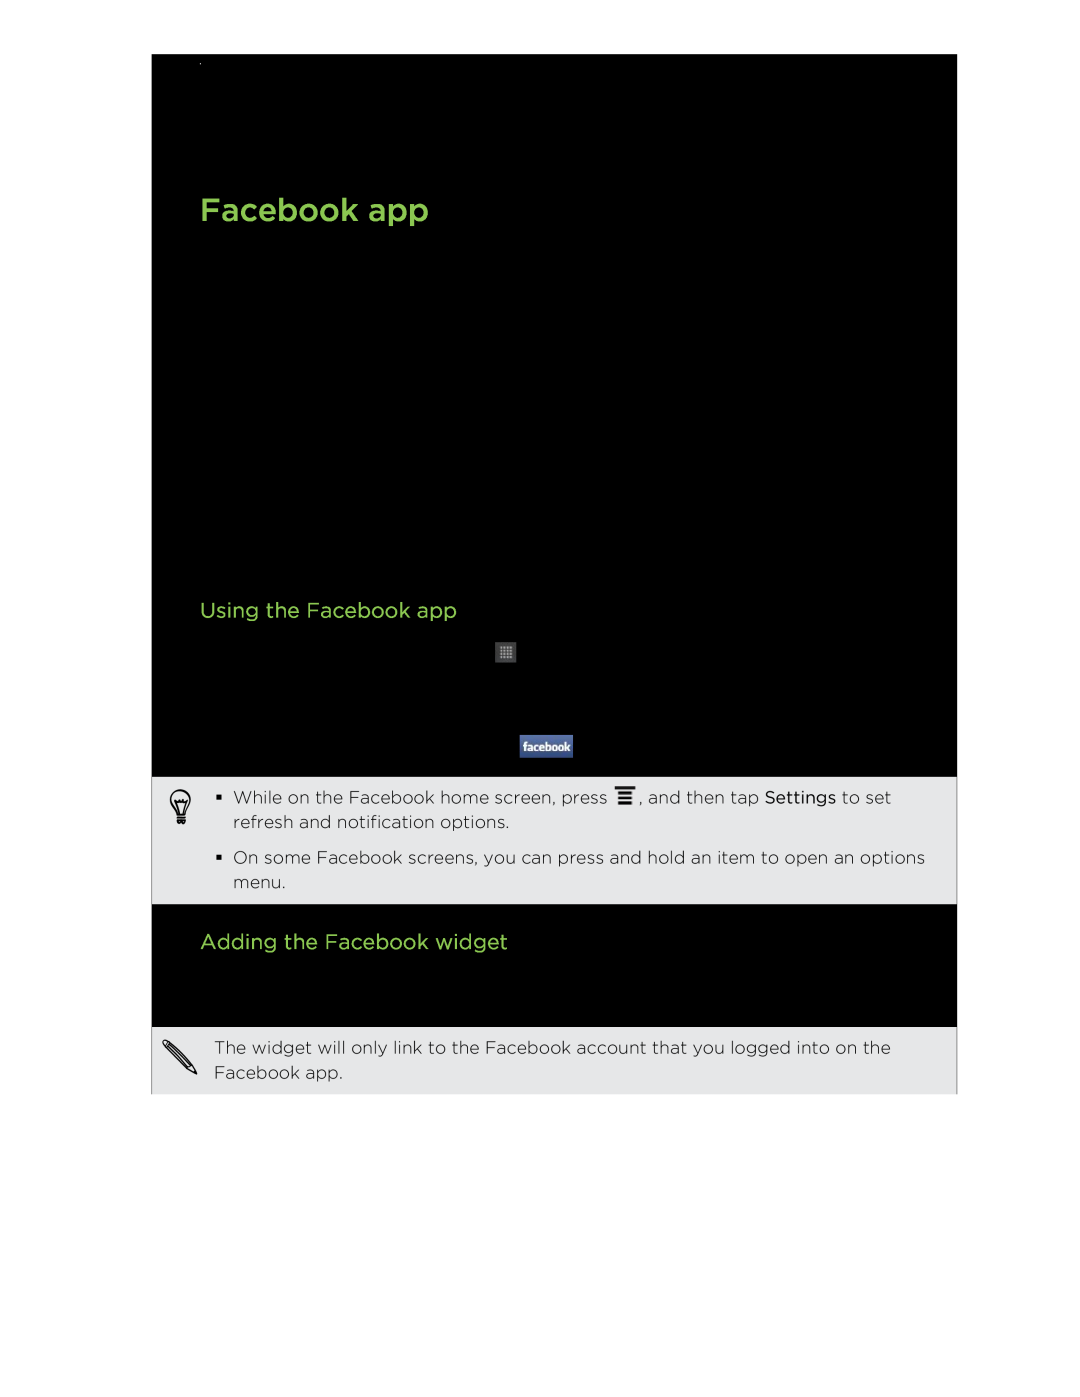 HTC HTCFlyerP512 manual Using the Facebook app, Adding the Facebook widget 